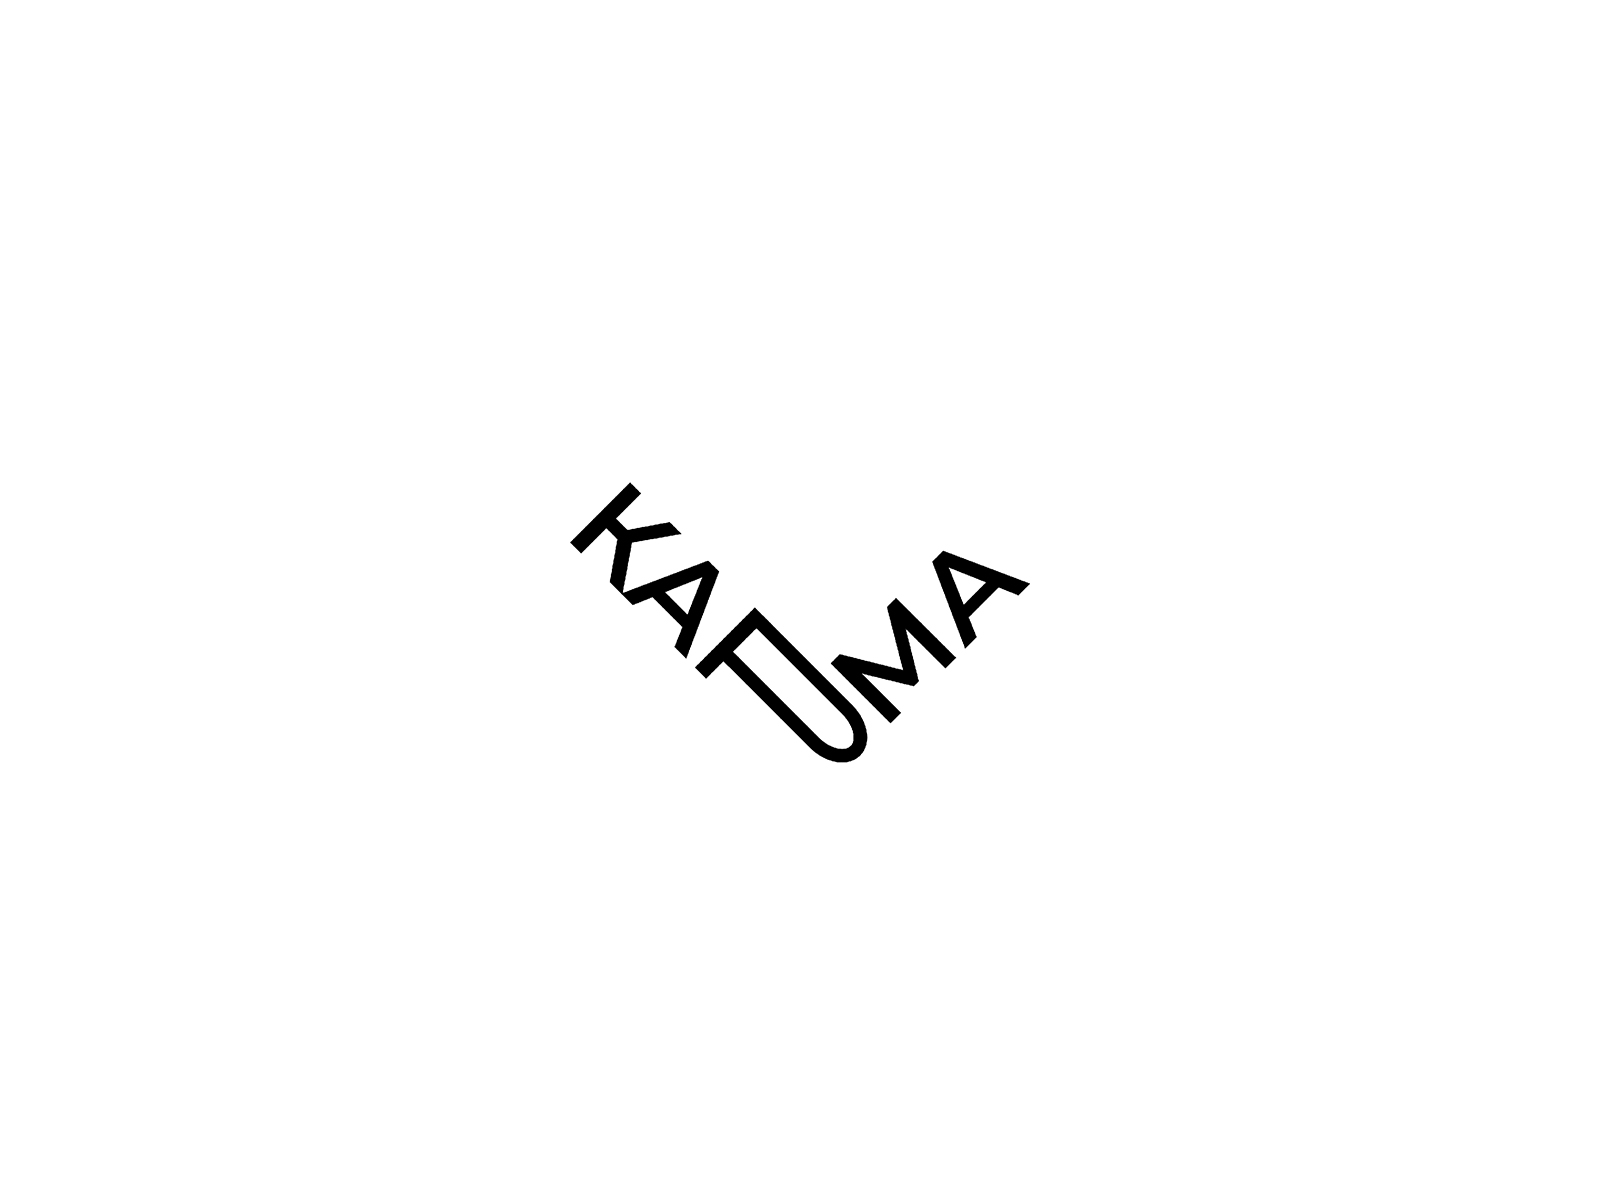 Identity concept for Karma Yoga Club